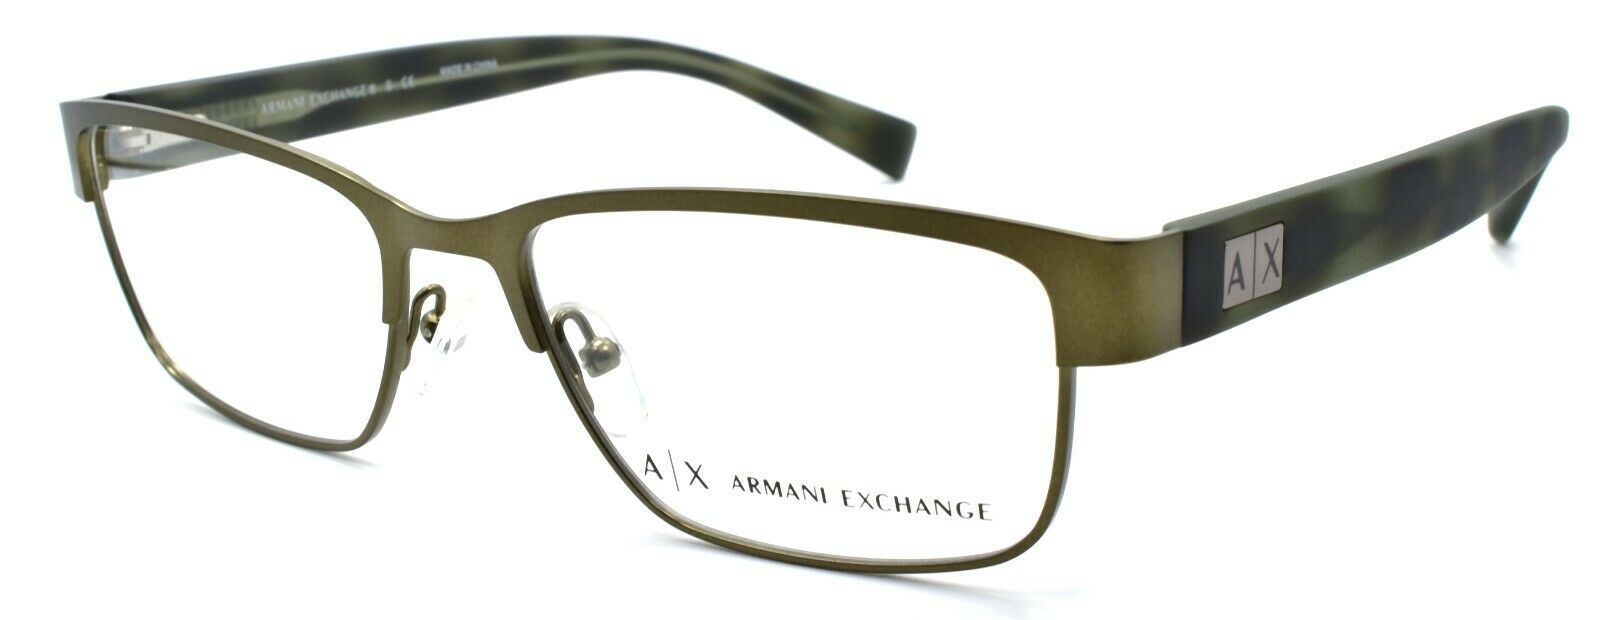 1-Armani Exchange AX1020 6092 Men's Eyeglasses Frames 54-17-145 Olive Gunmetal-8053672626964-IKSpecs